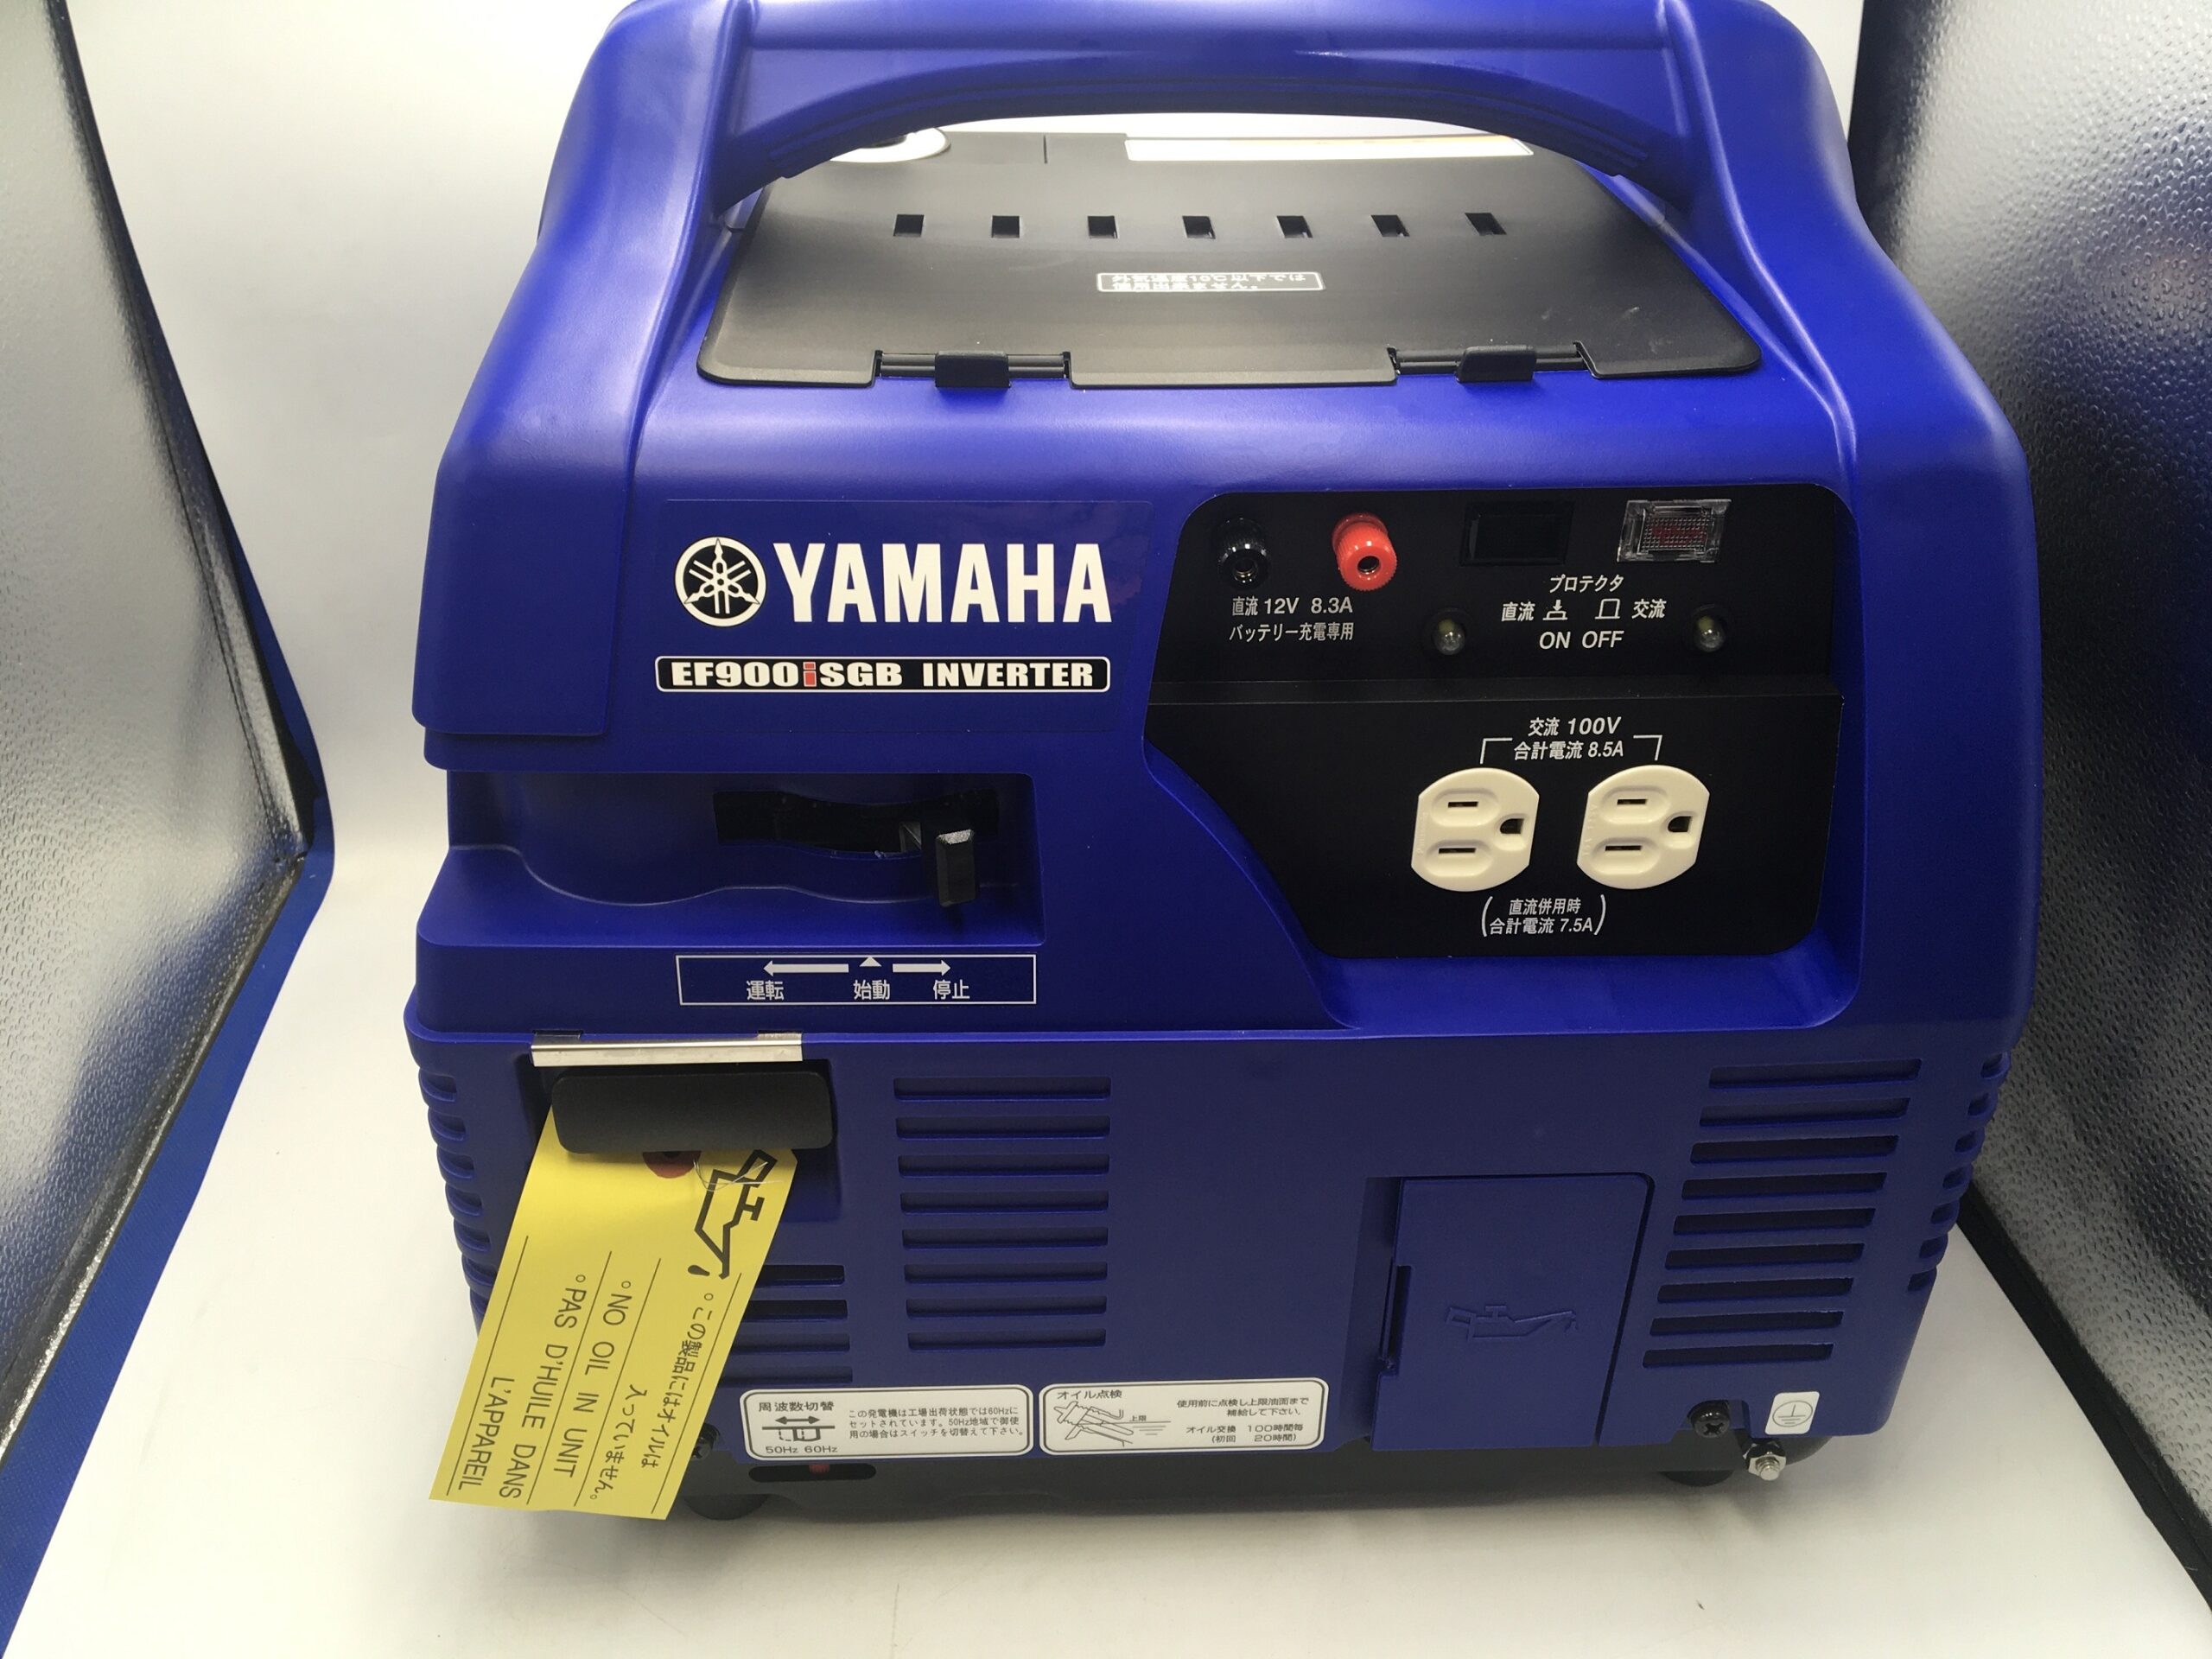 EF900iSGB [YAMAHA] 発電機